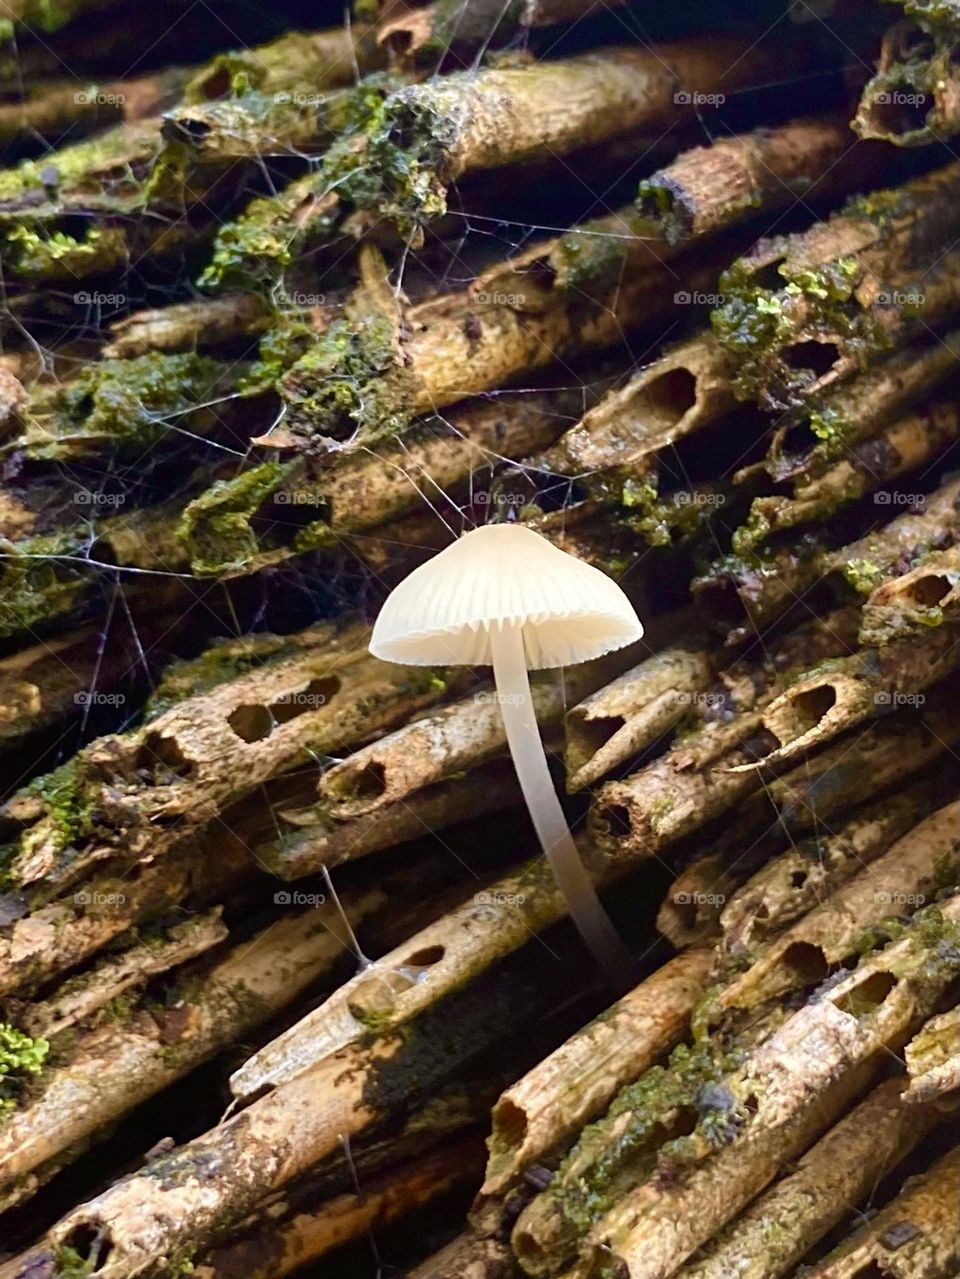 Mystical mushroom 